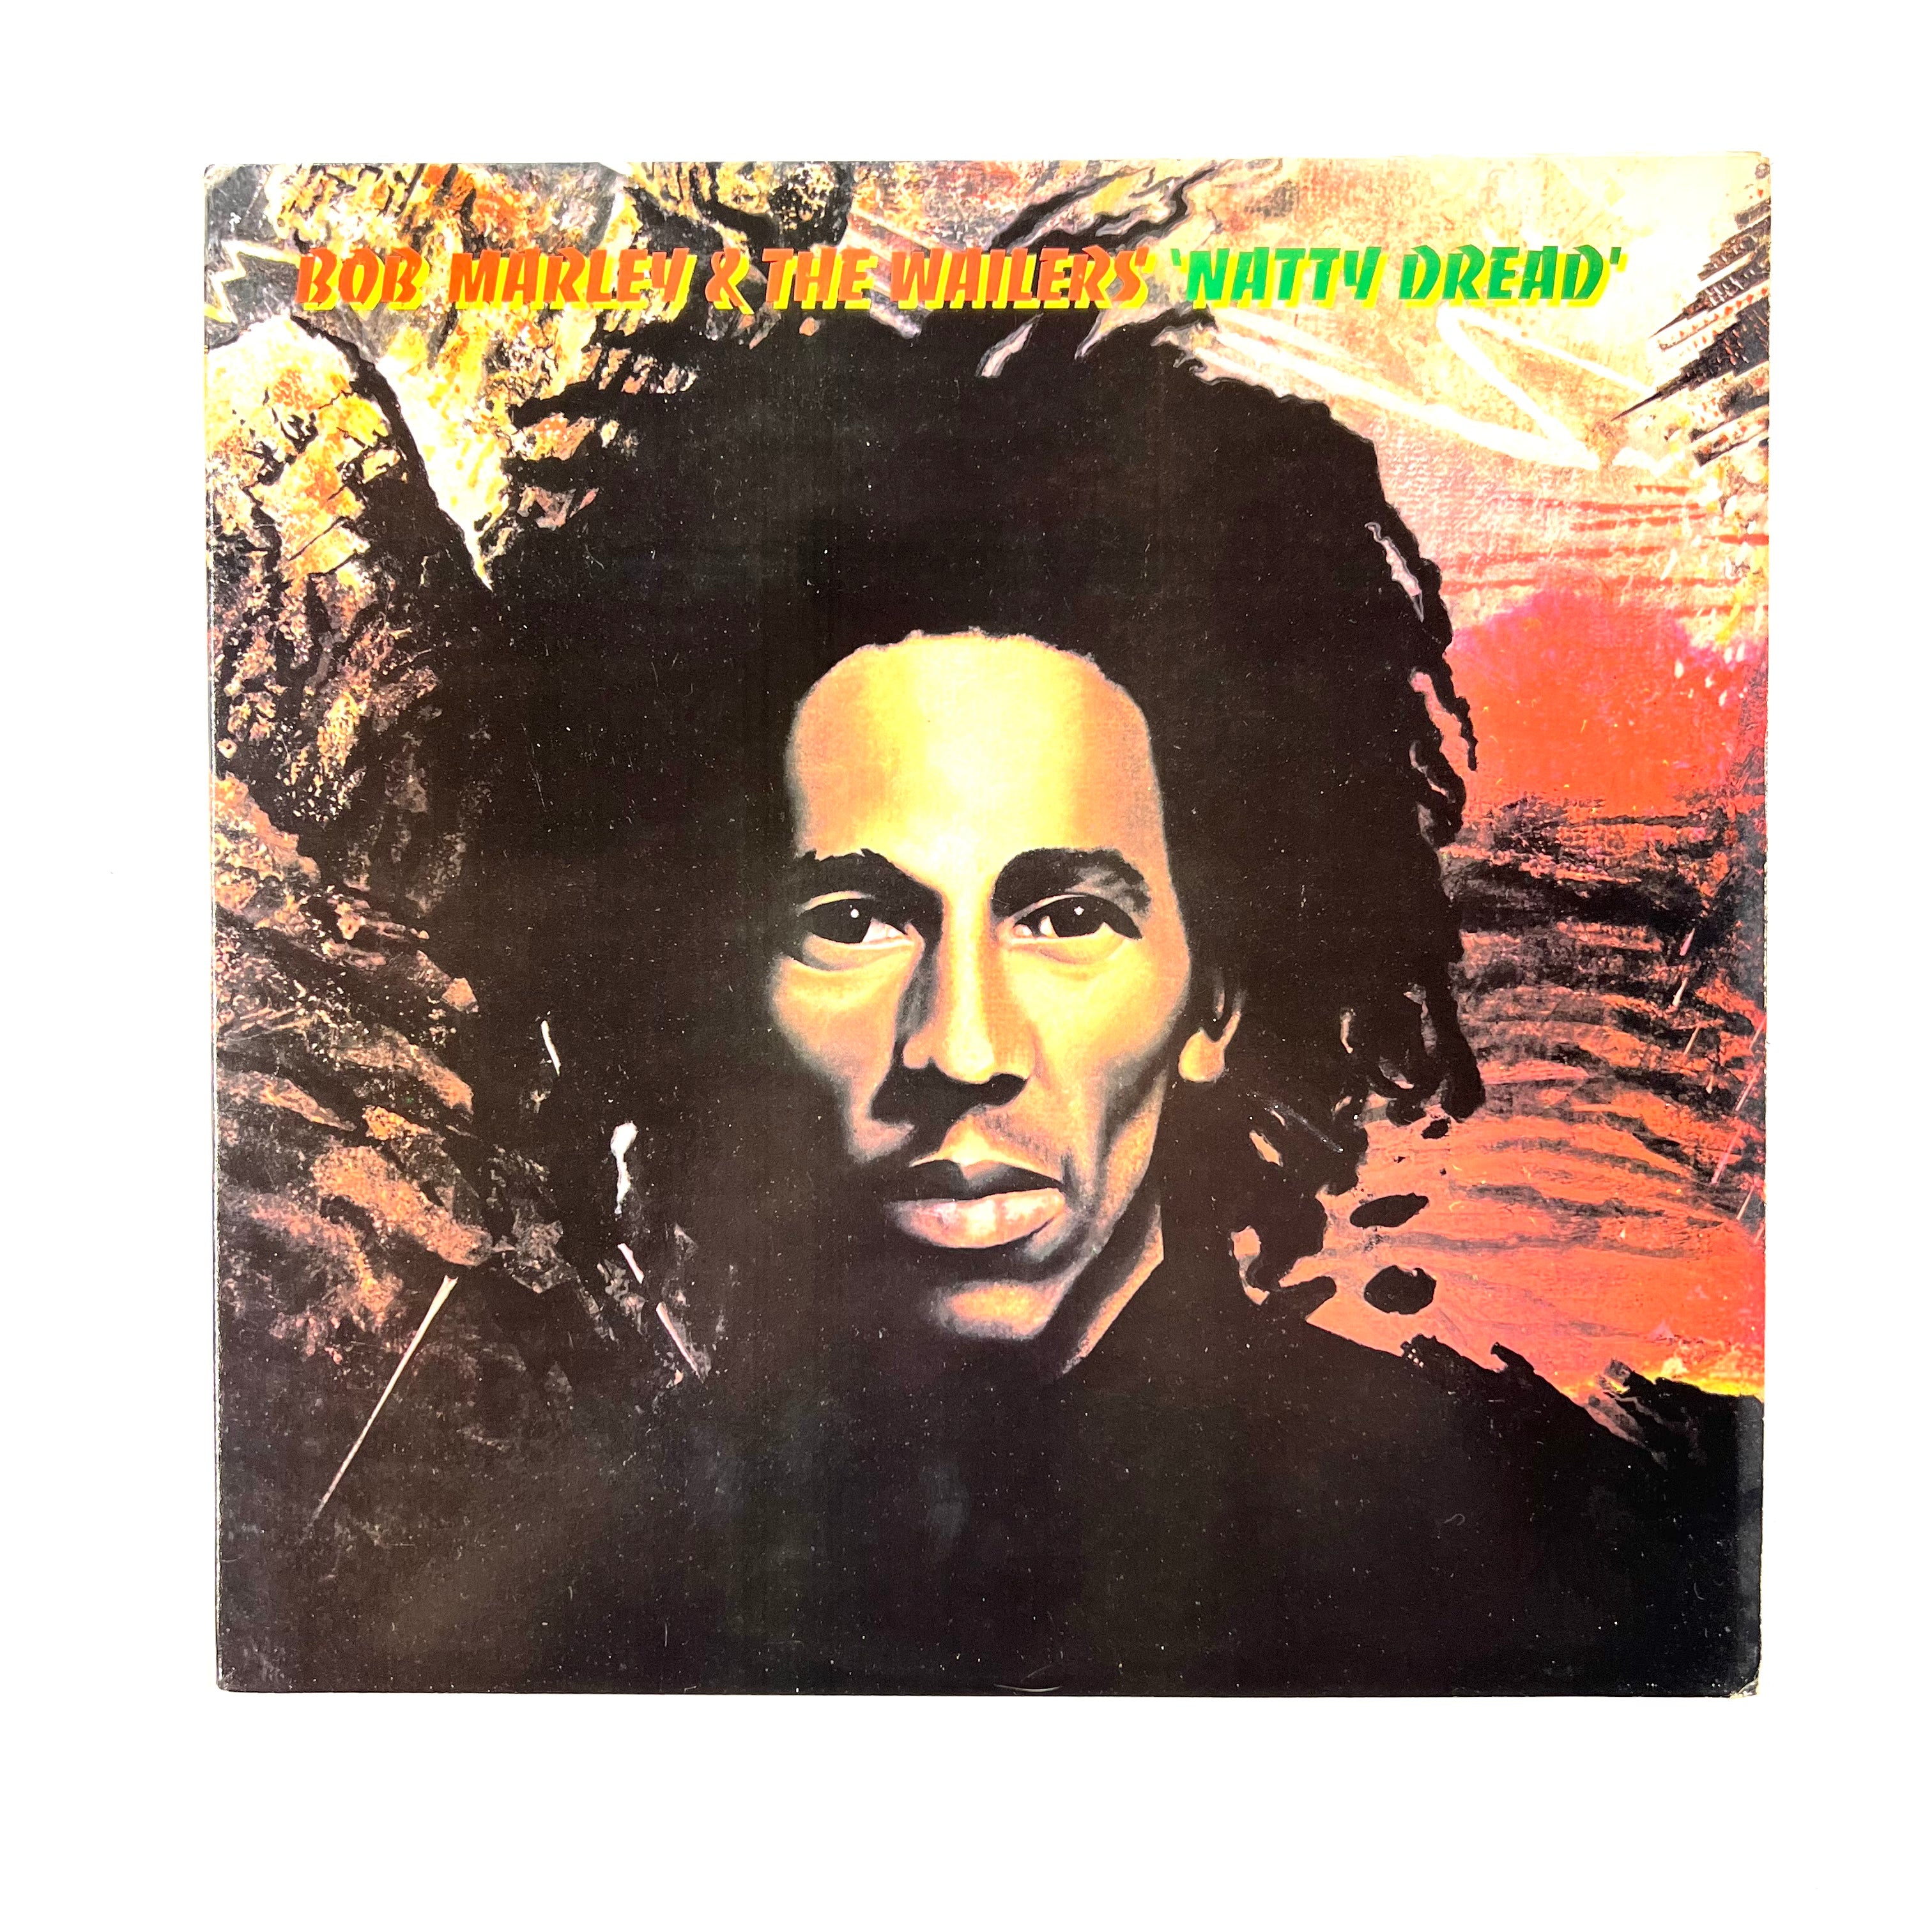 Bob Marley & The Wailers - Natty Dread – Turntable Revival